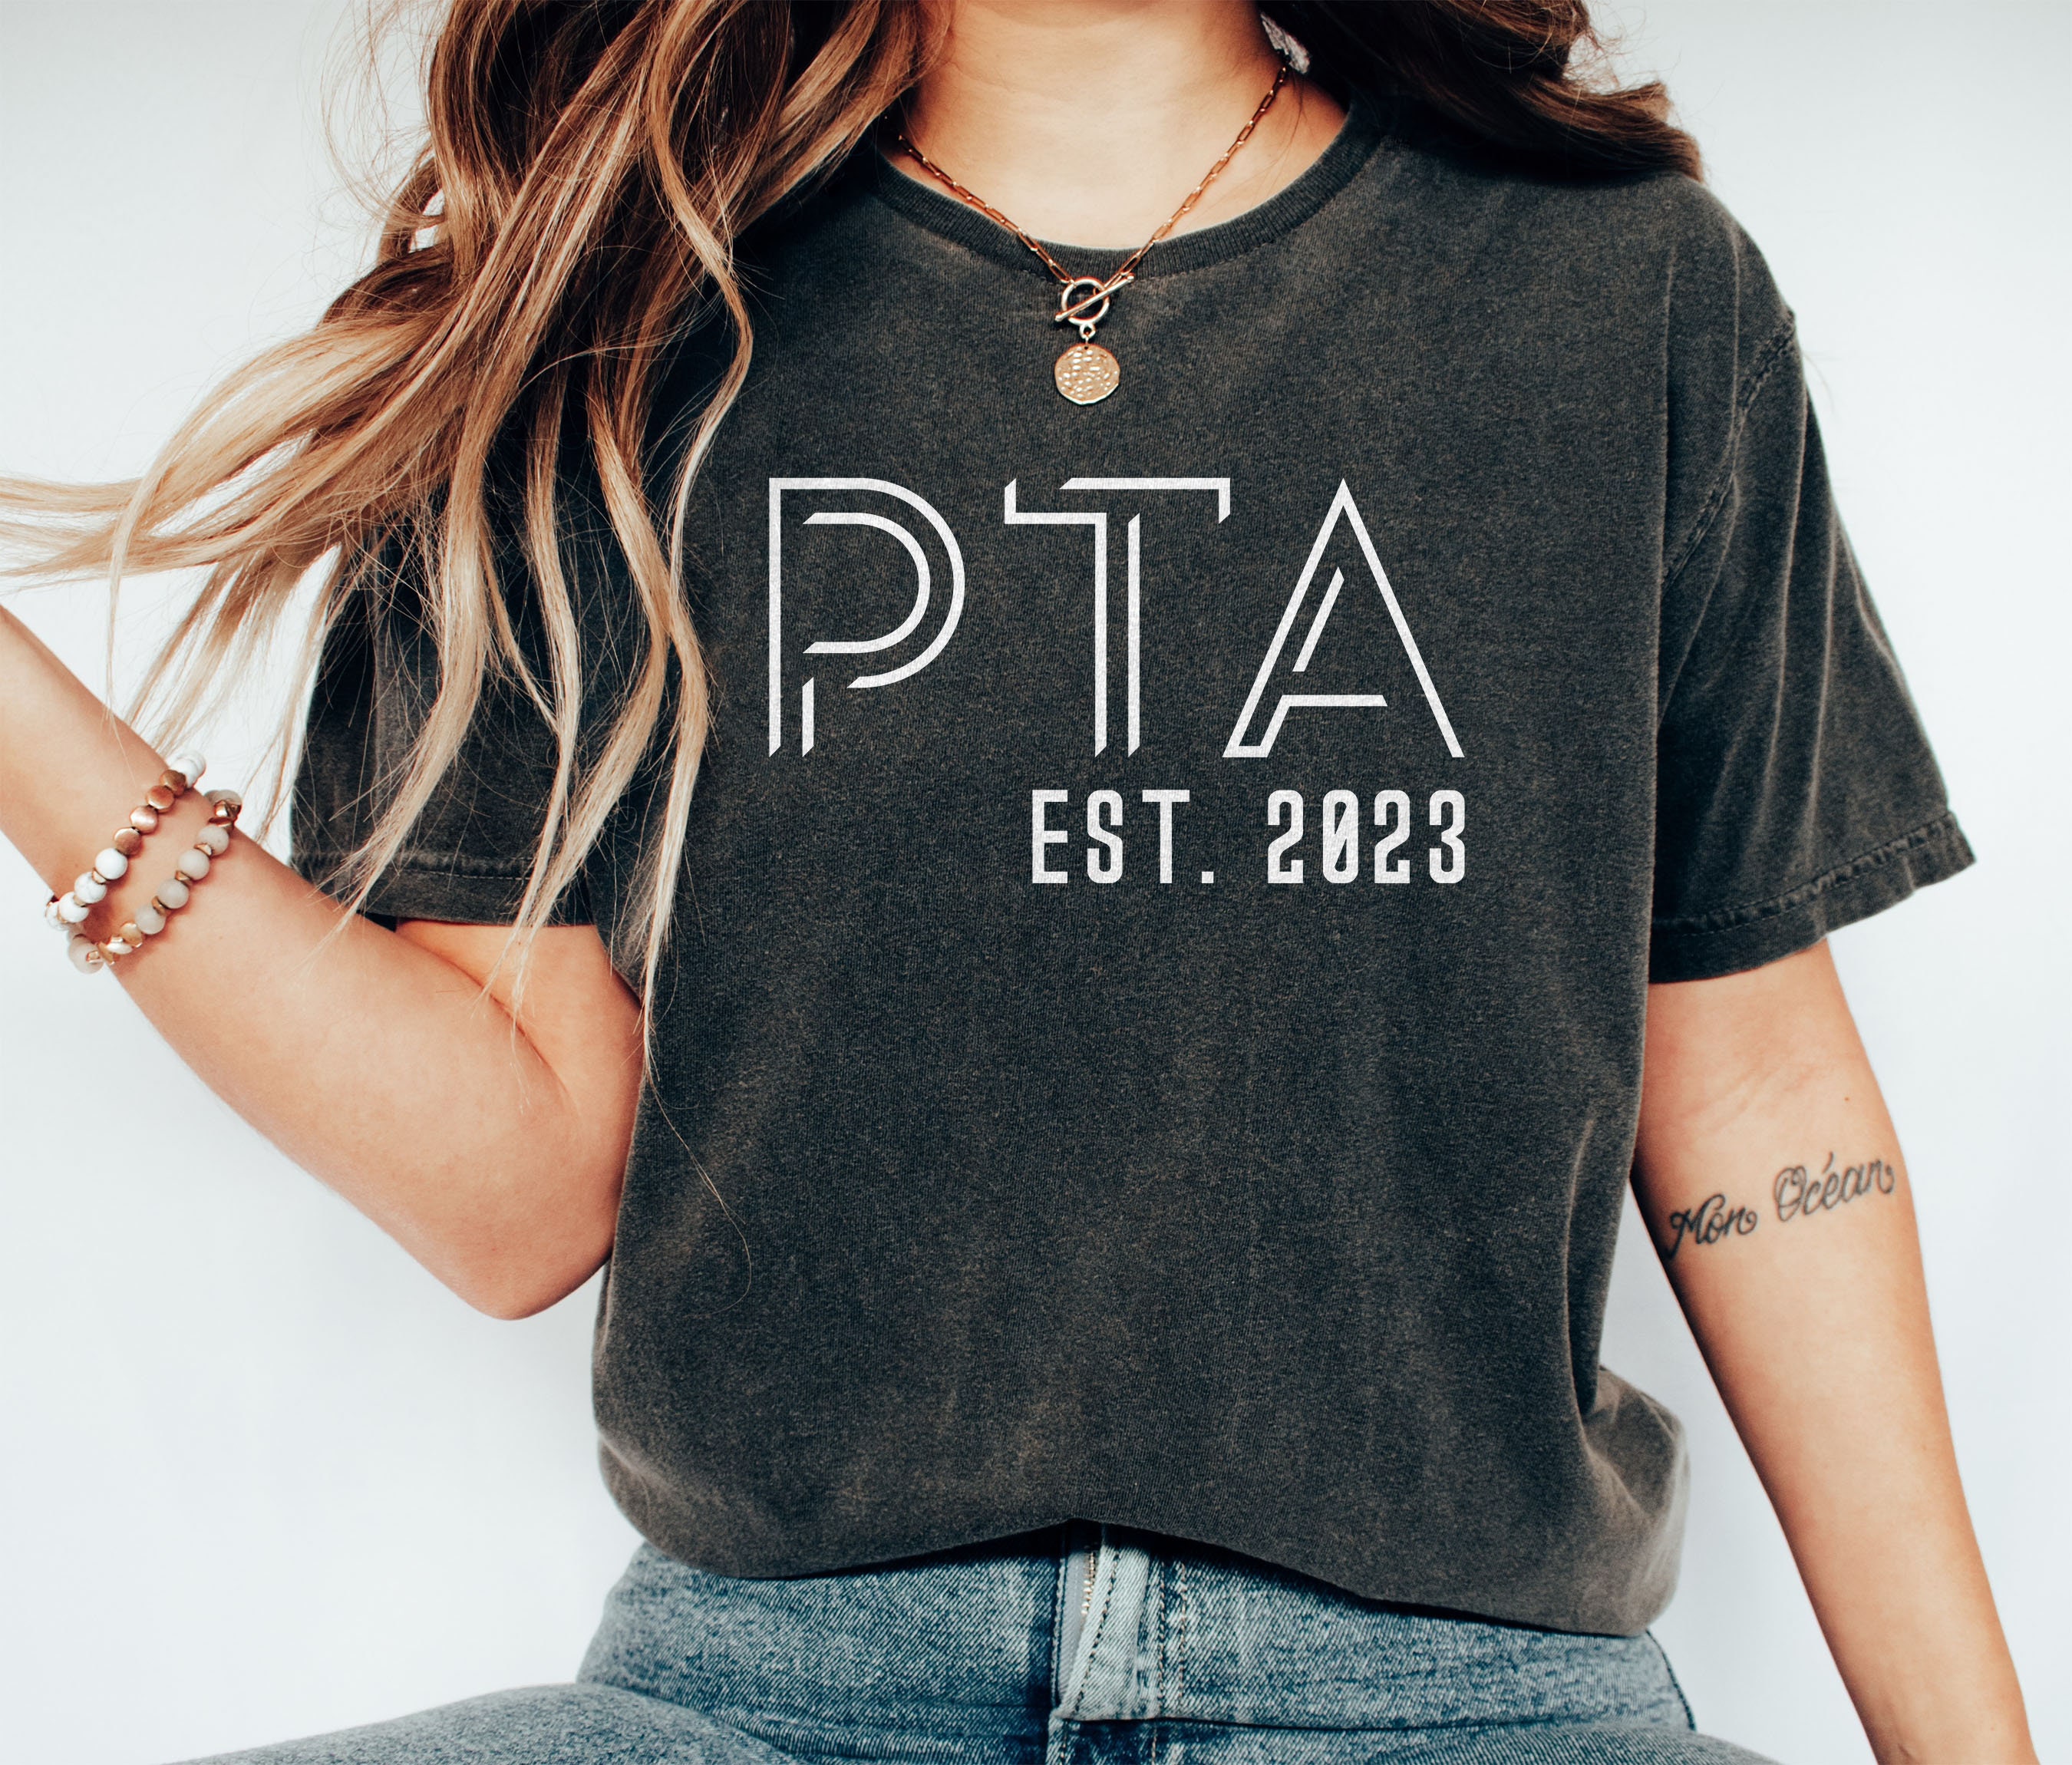 PTA Shirt, PTA Est. 2024, Physical Therapist Assistant T-Shirt, Rehab Therapy, Associates Degree, PT Student Graduation Gift, unisex Tee